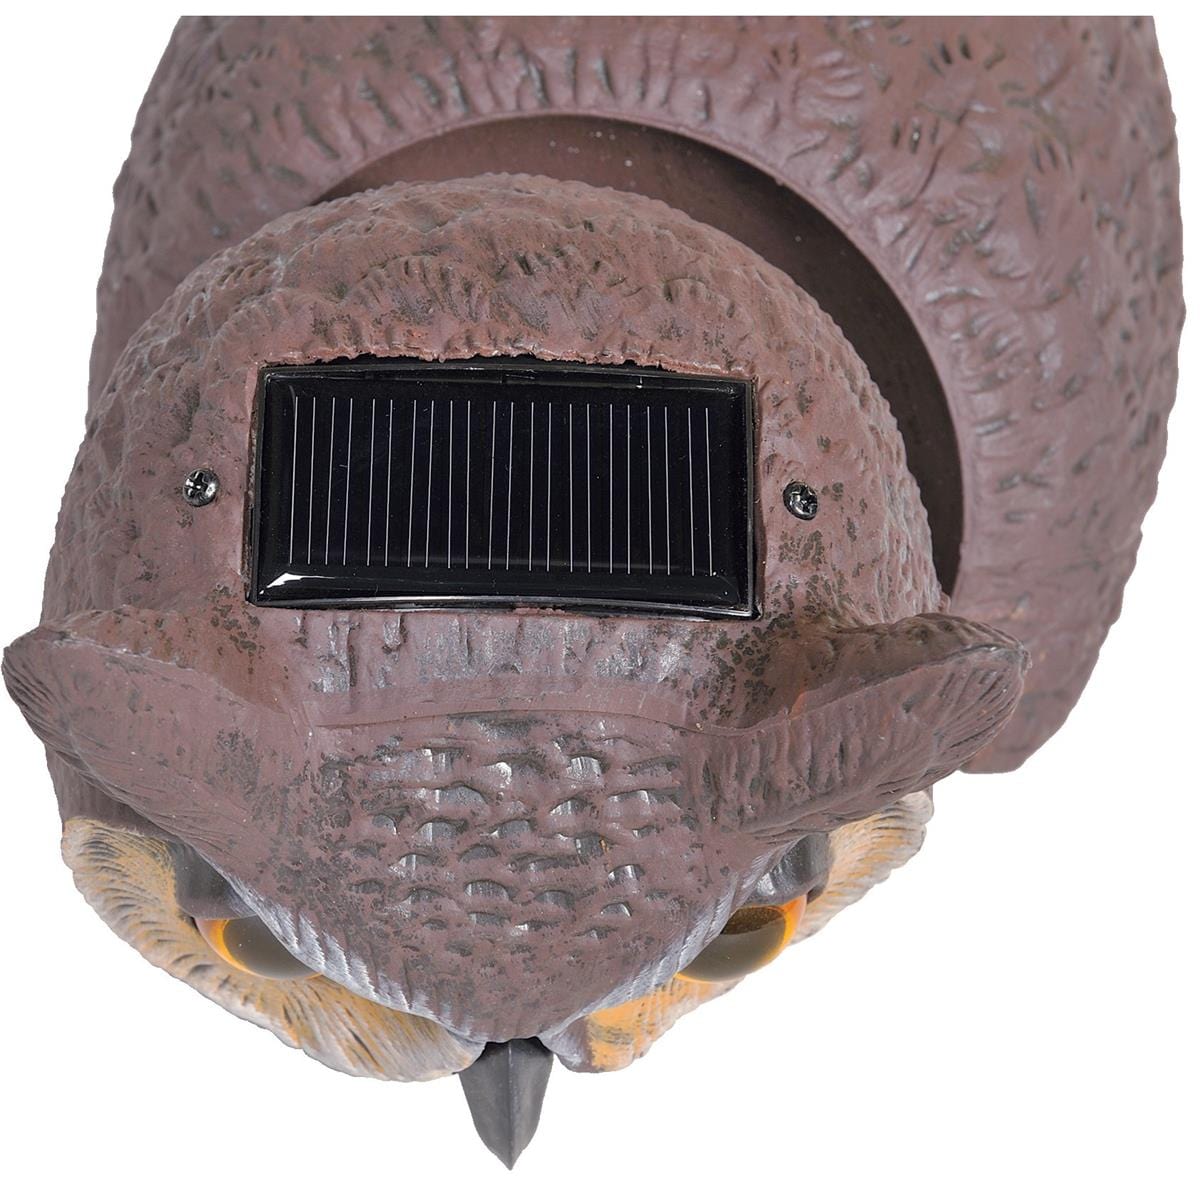 Solar-Powered Owl Decoy with Rotating Head